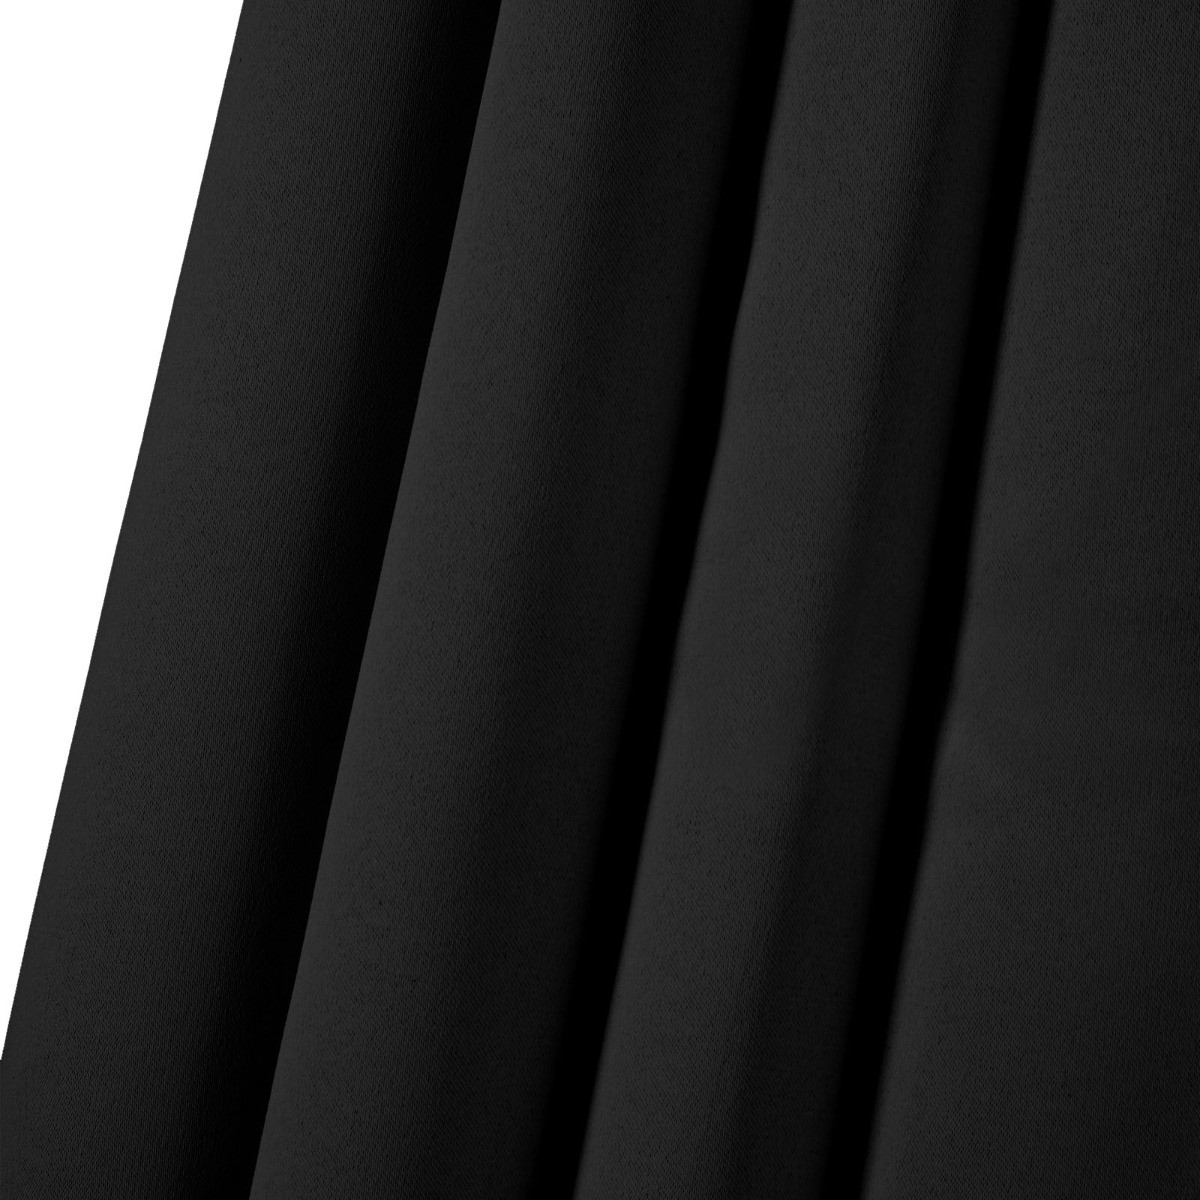 Dreamscene Eyelet Blackout Curtains - Black, 66" X 72">